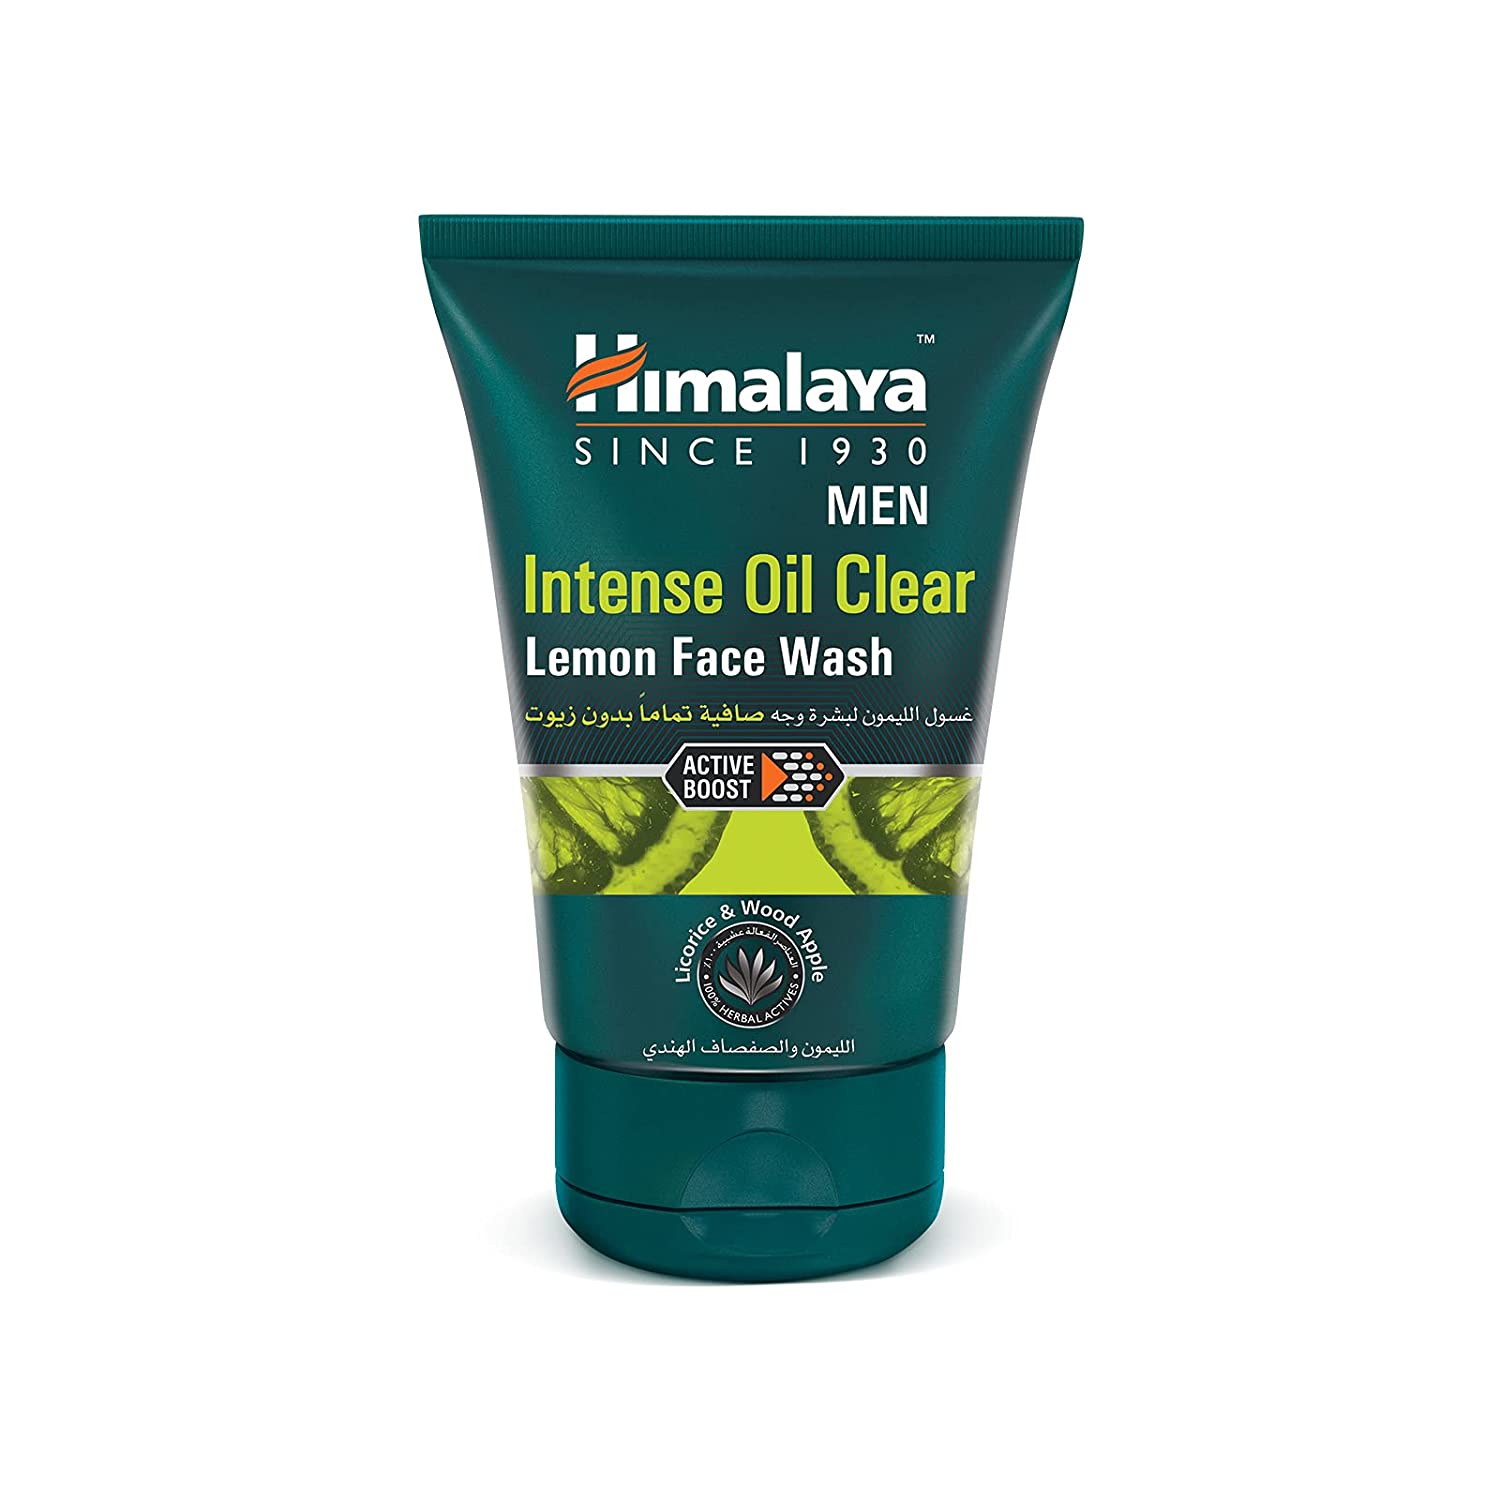 Himalaya Men Intense Oil Clear Lemon Face Wash - 100ml